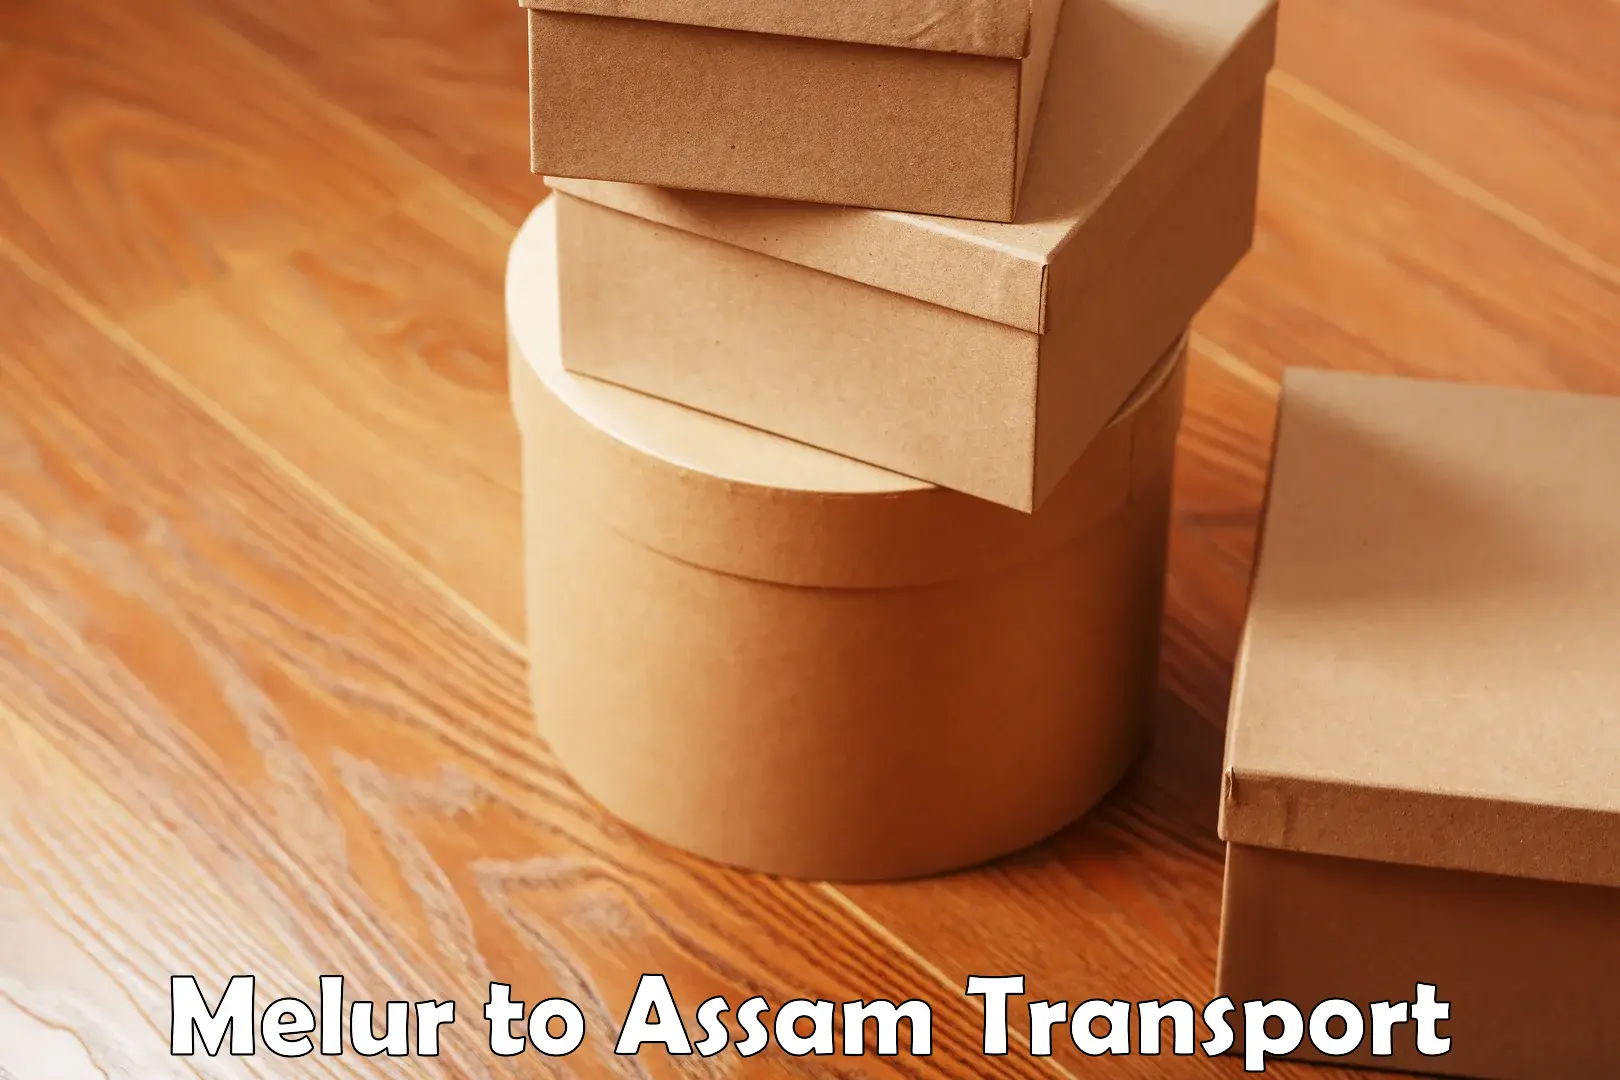 Cycle transportation service Melur to Lala Assam